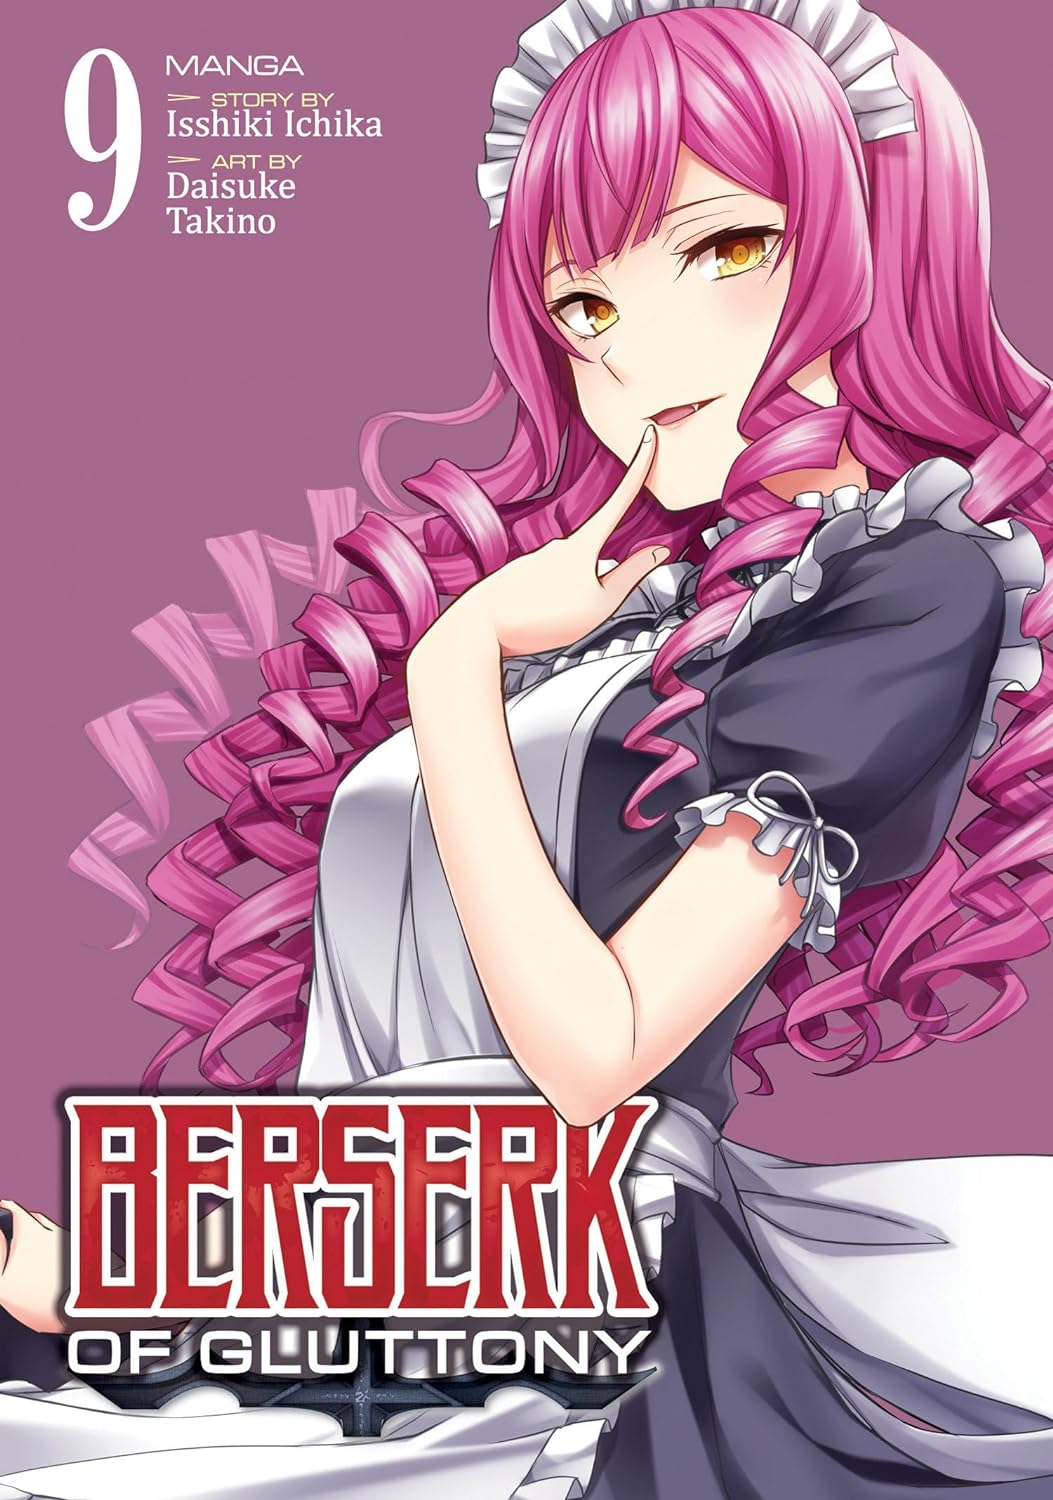 (26/12/2023) Berserk of Gluttony (Manga) Vol. 09